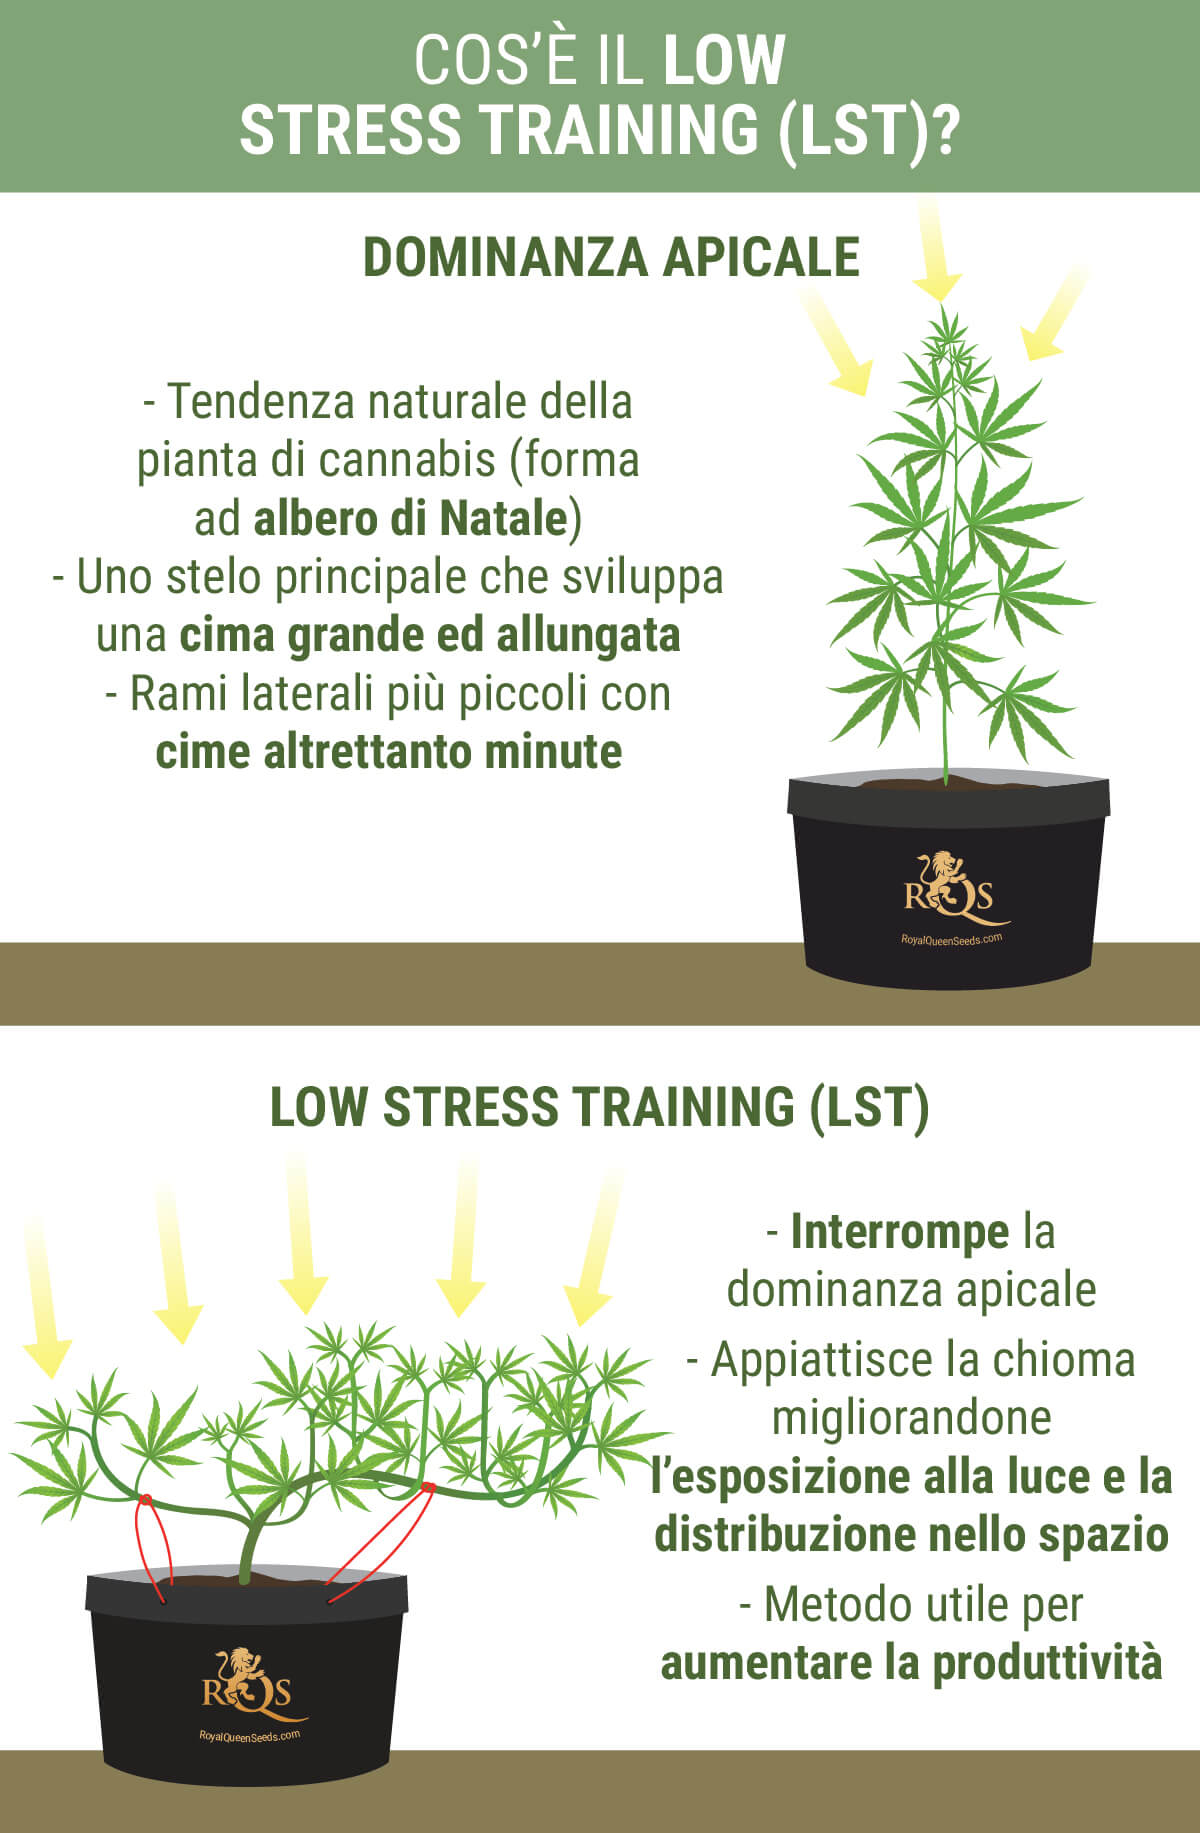 Cos'è Il Low Stress Training?